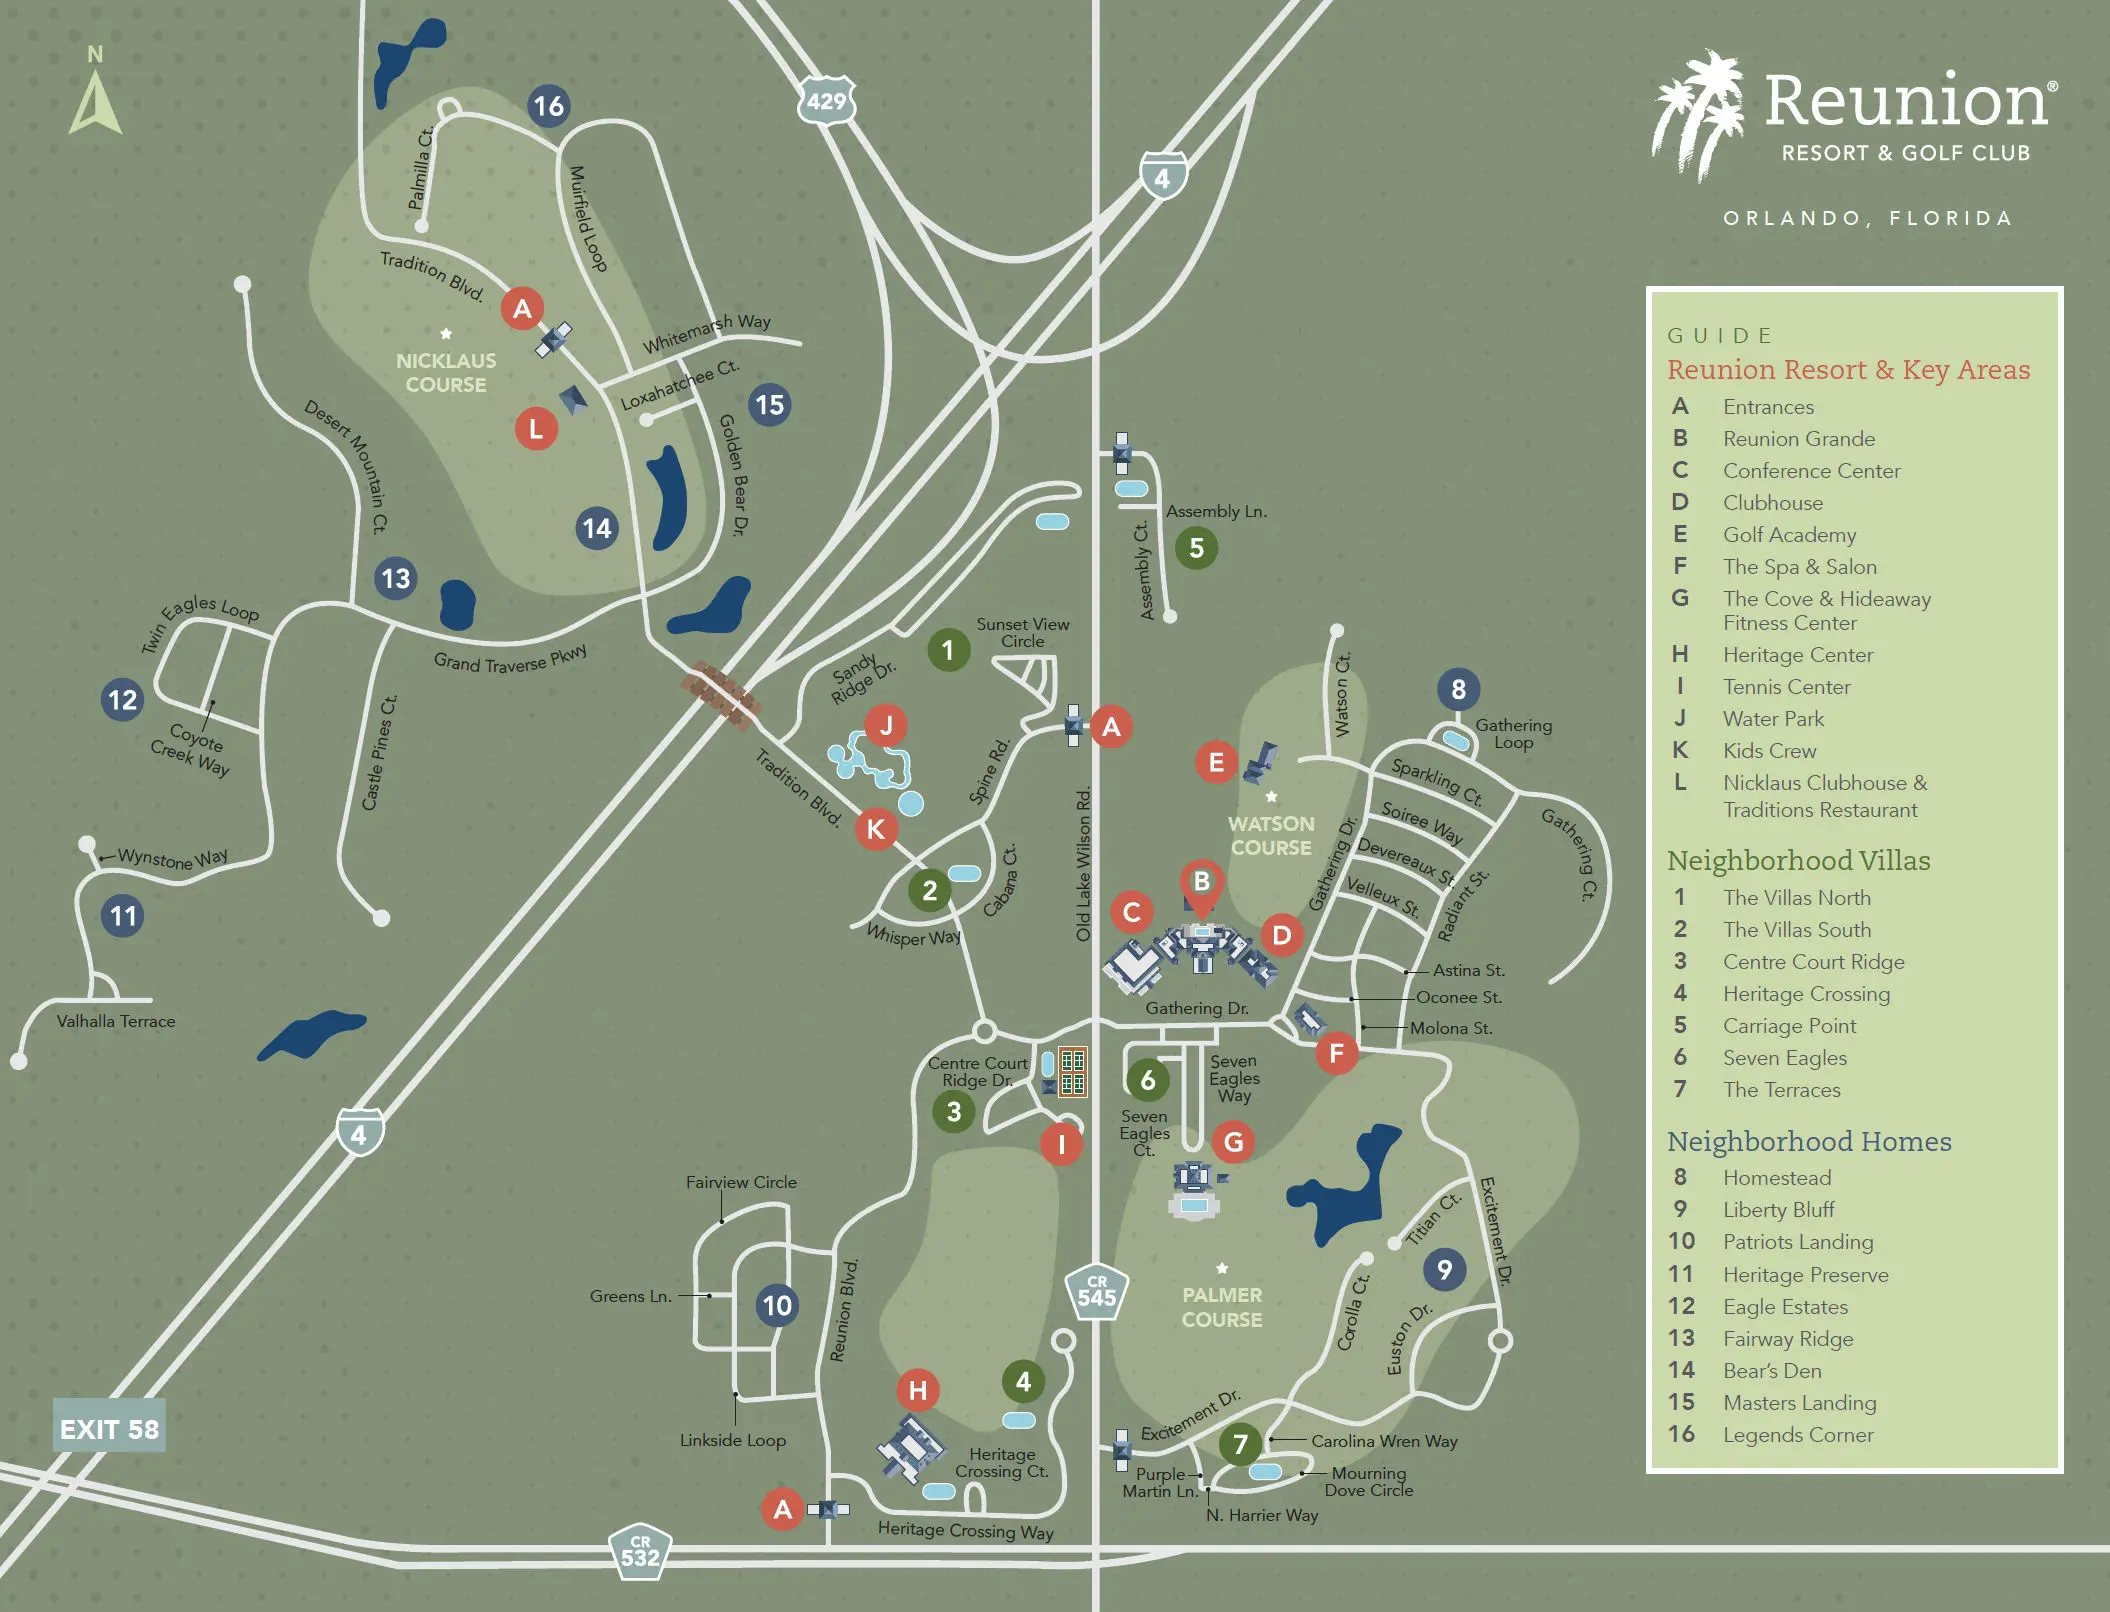 Map of Reunion Resort highlighting all neighborhoods and amenities.